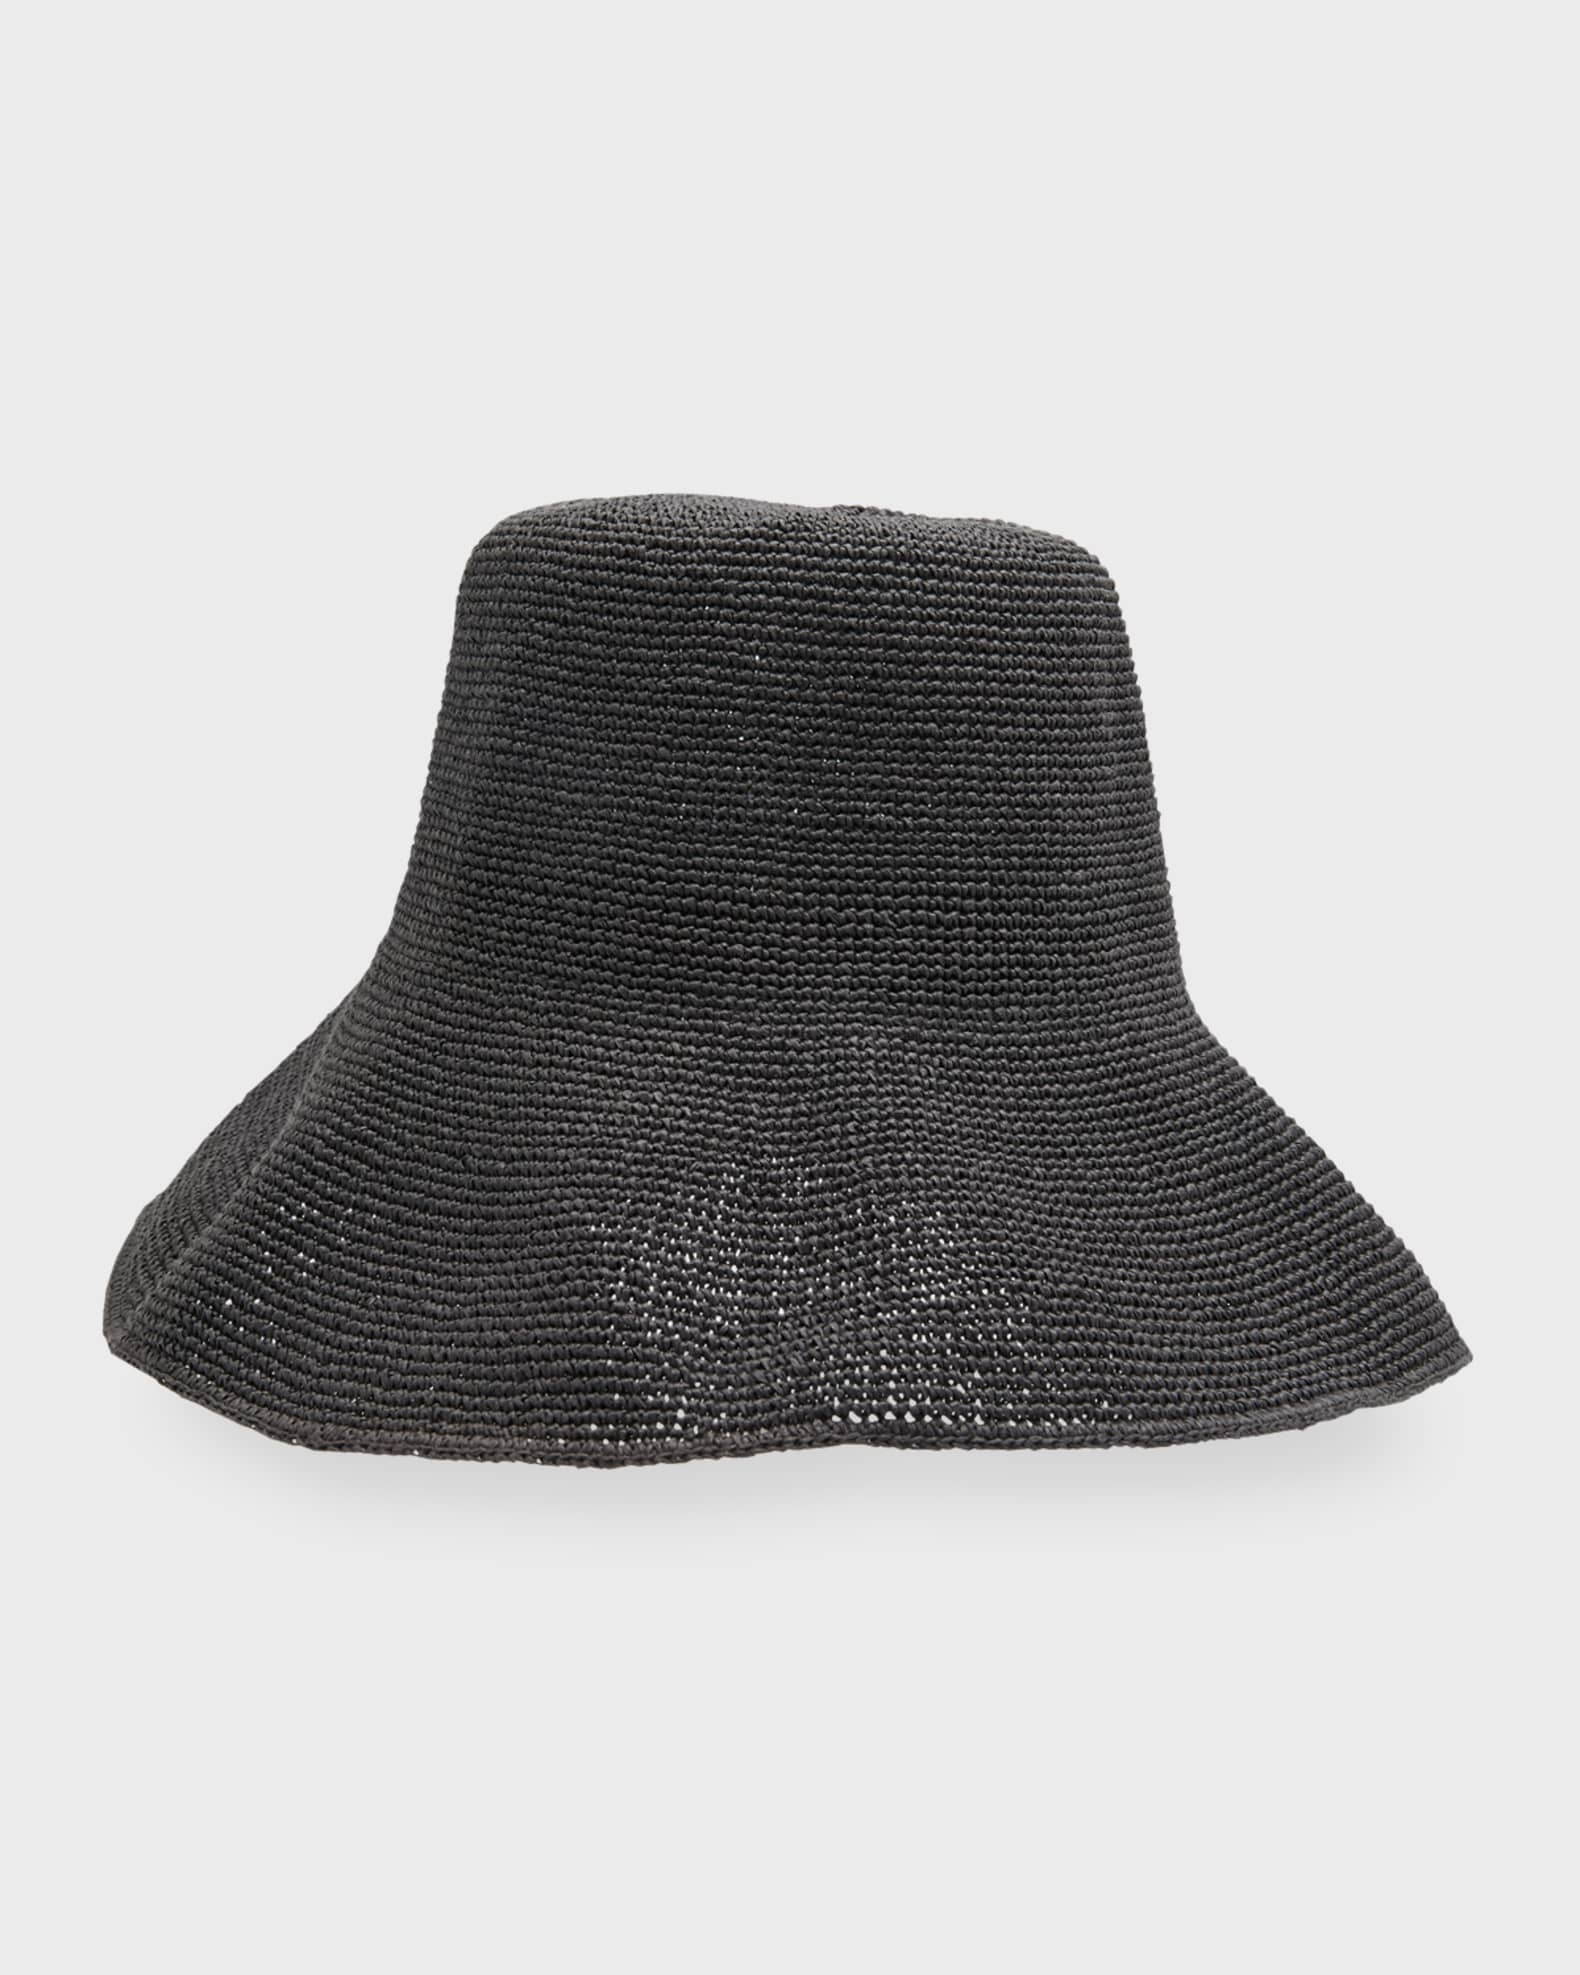 Toteme black hat